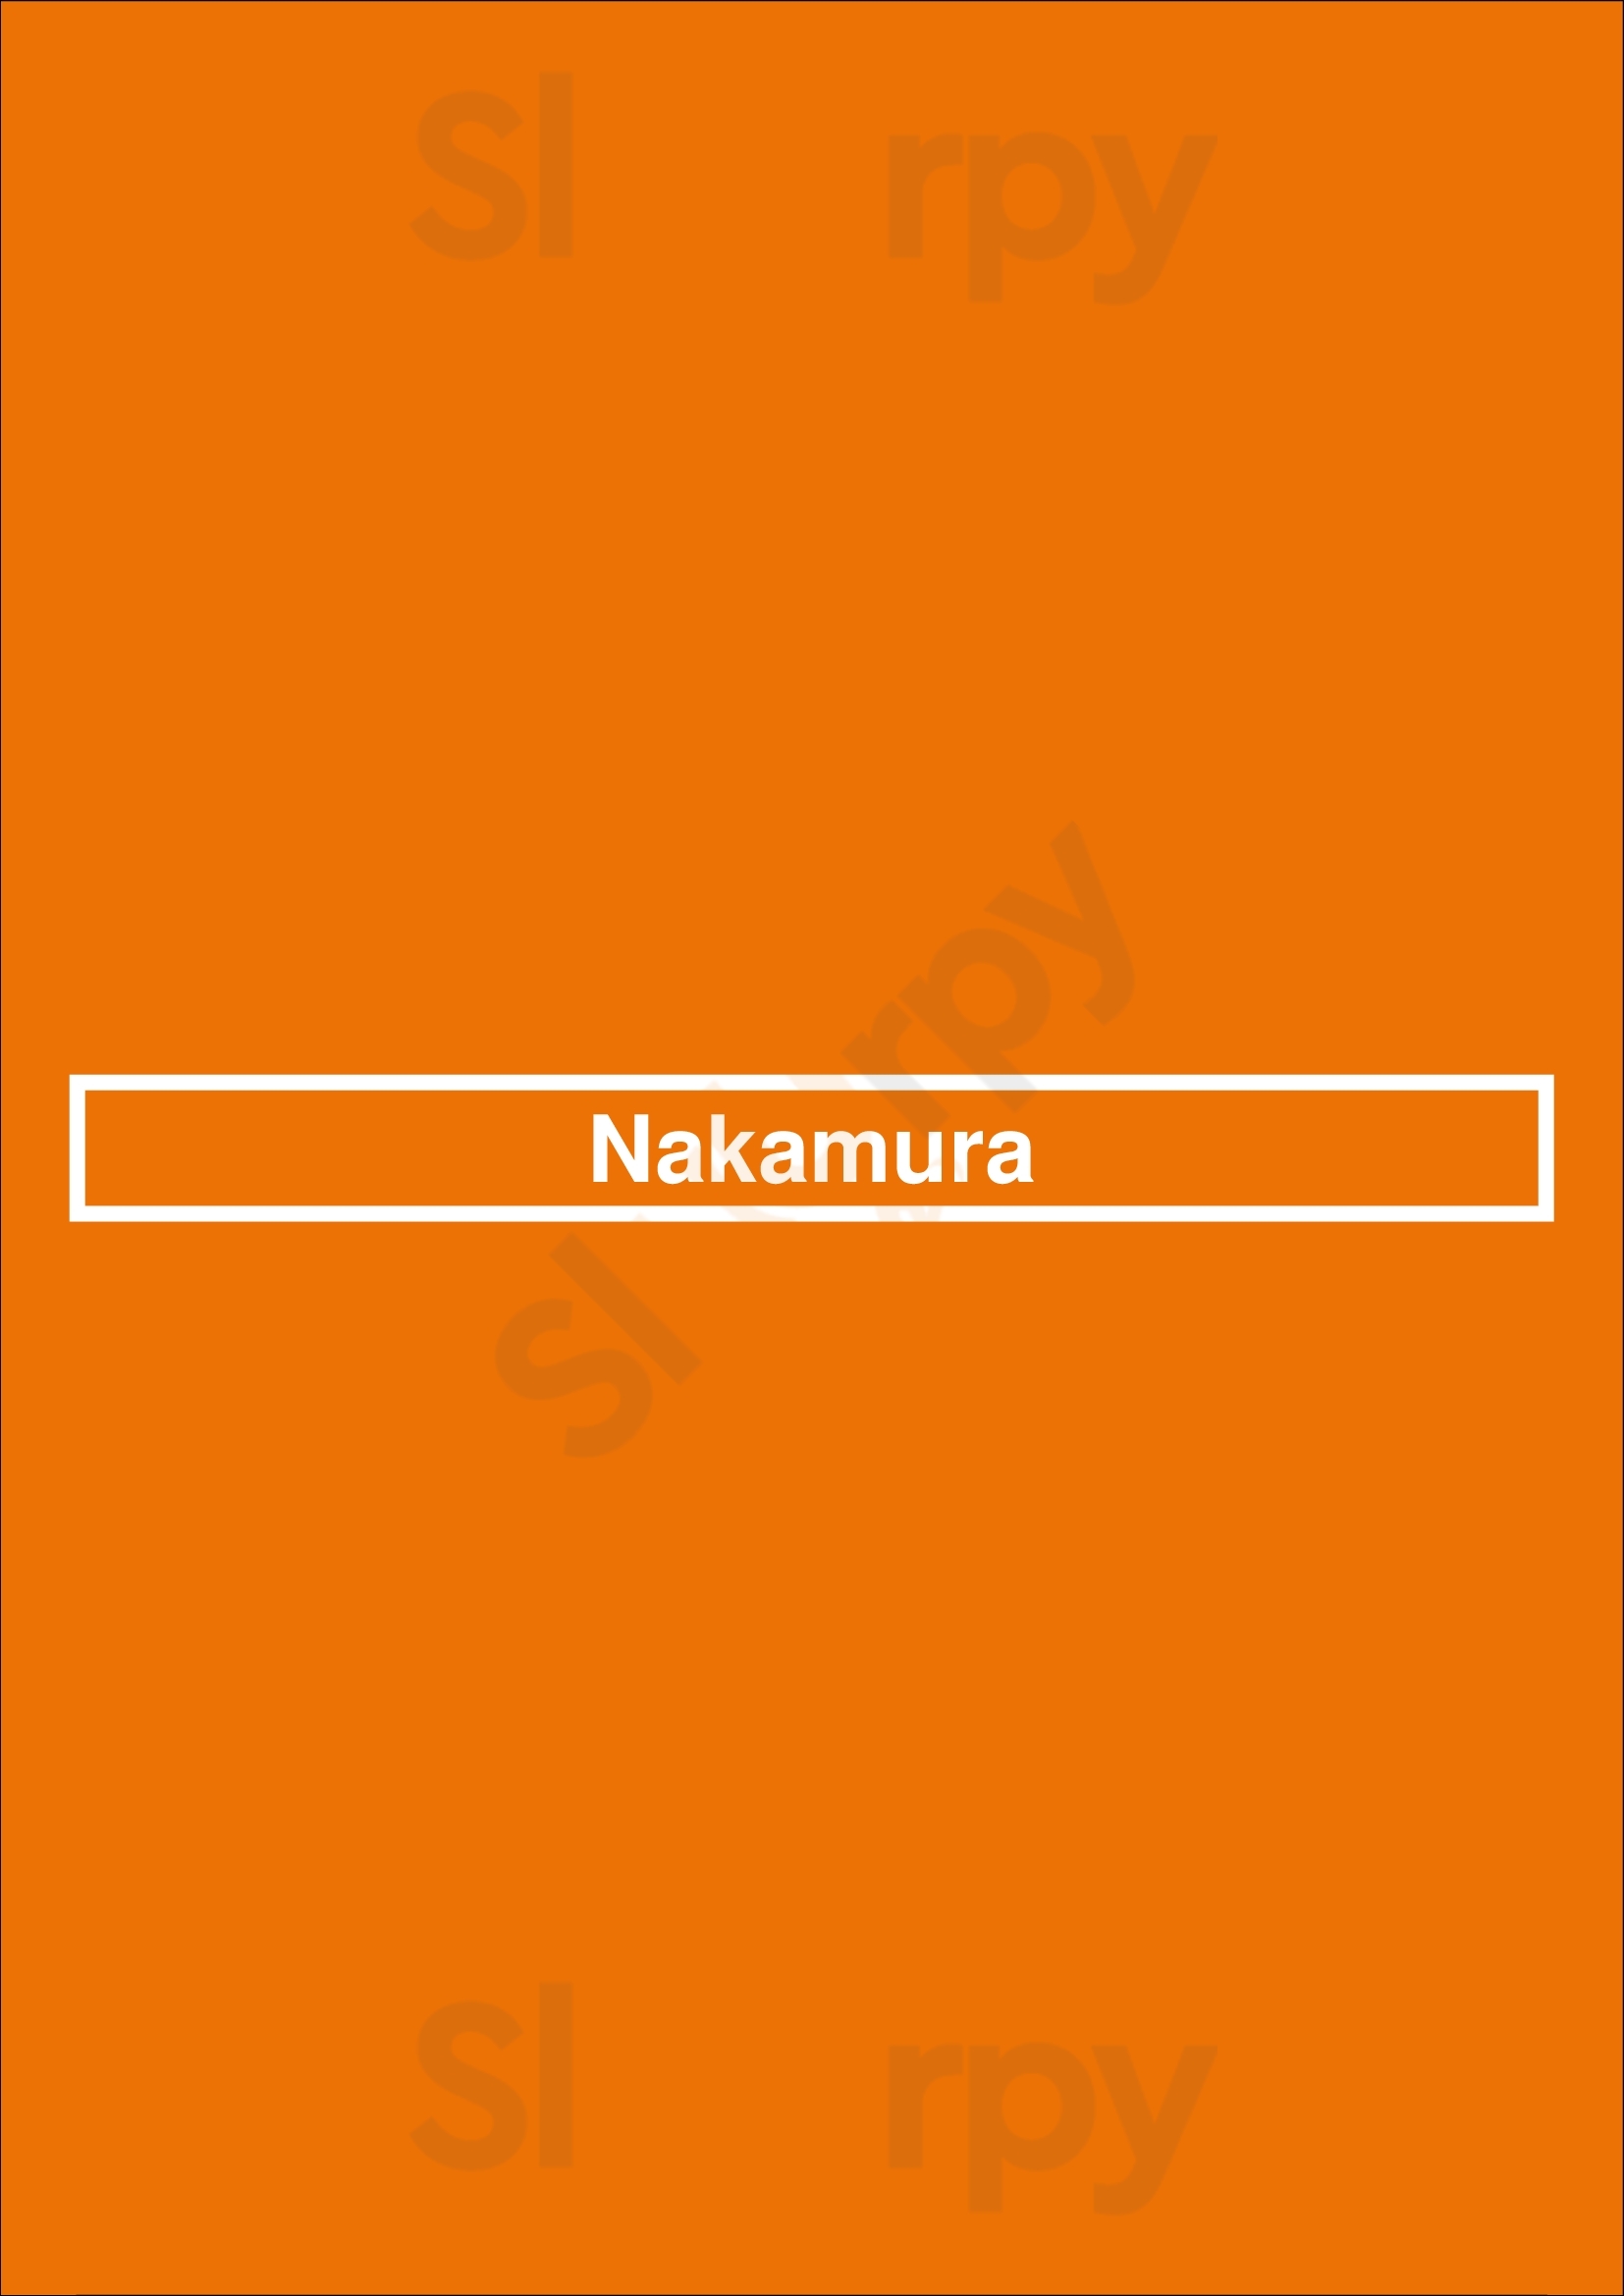 Nakamura Punta Cana Menu - 1